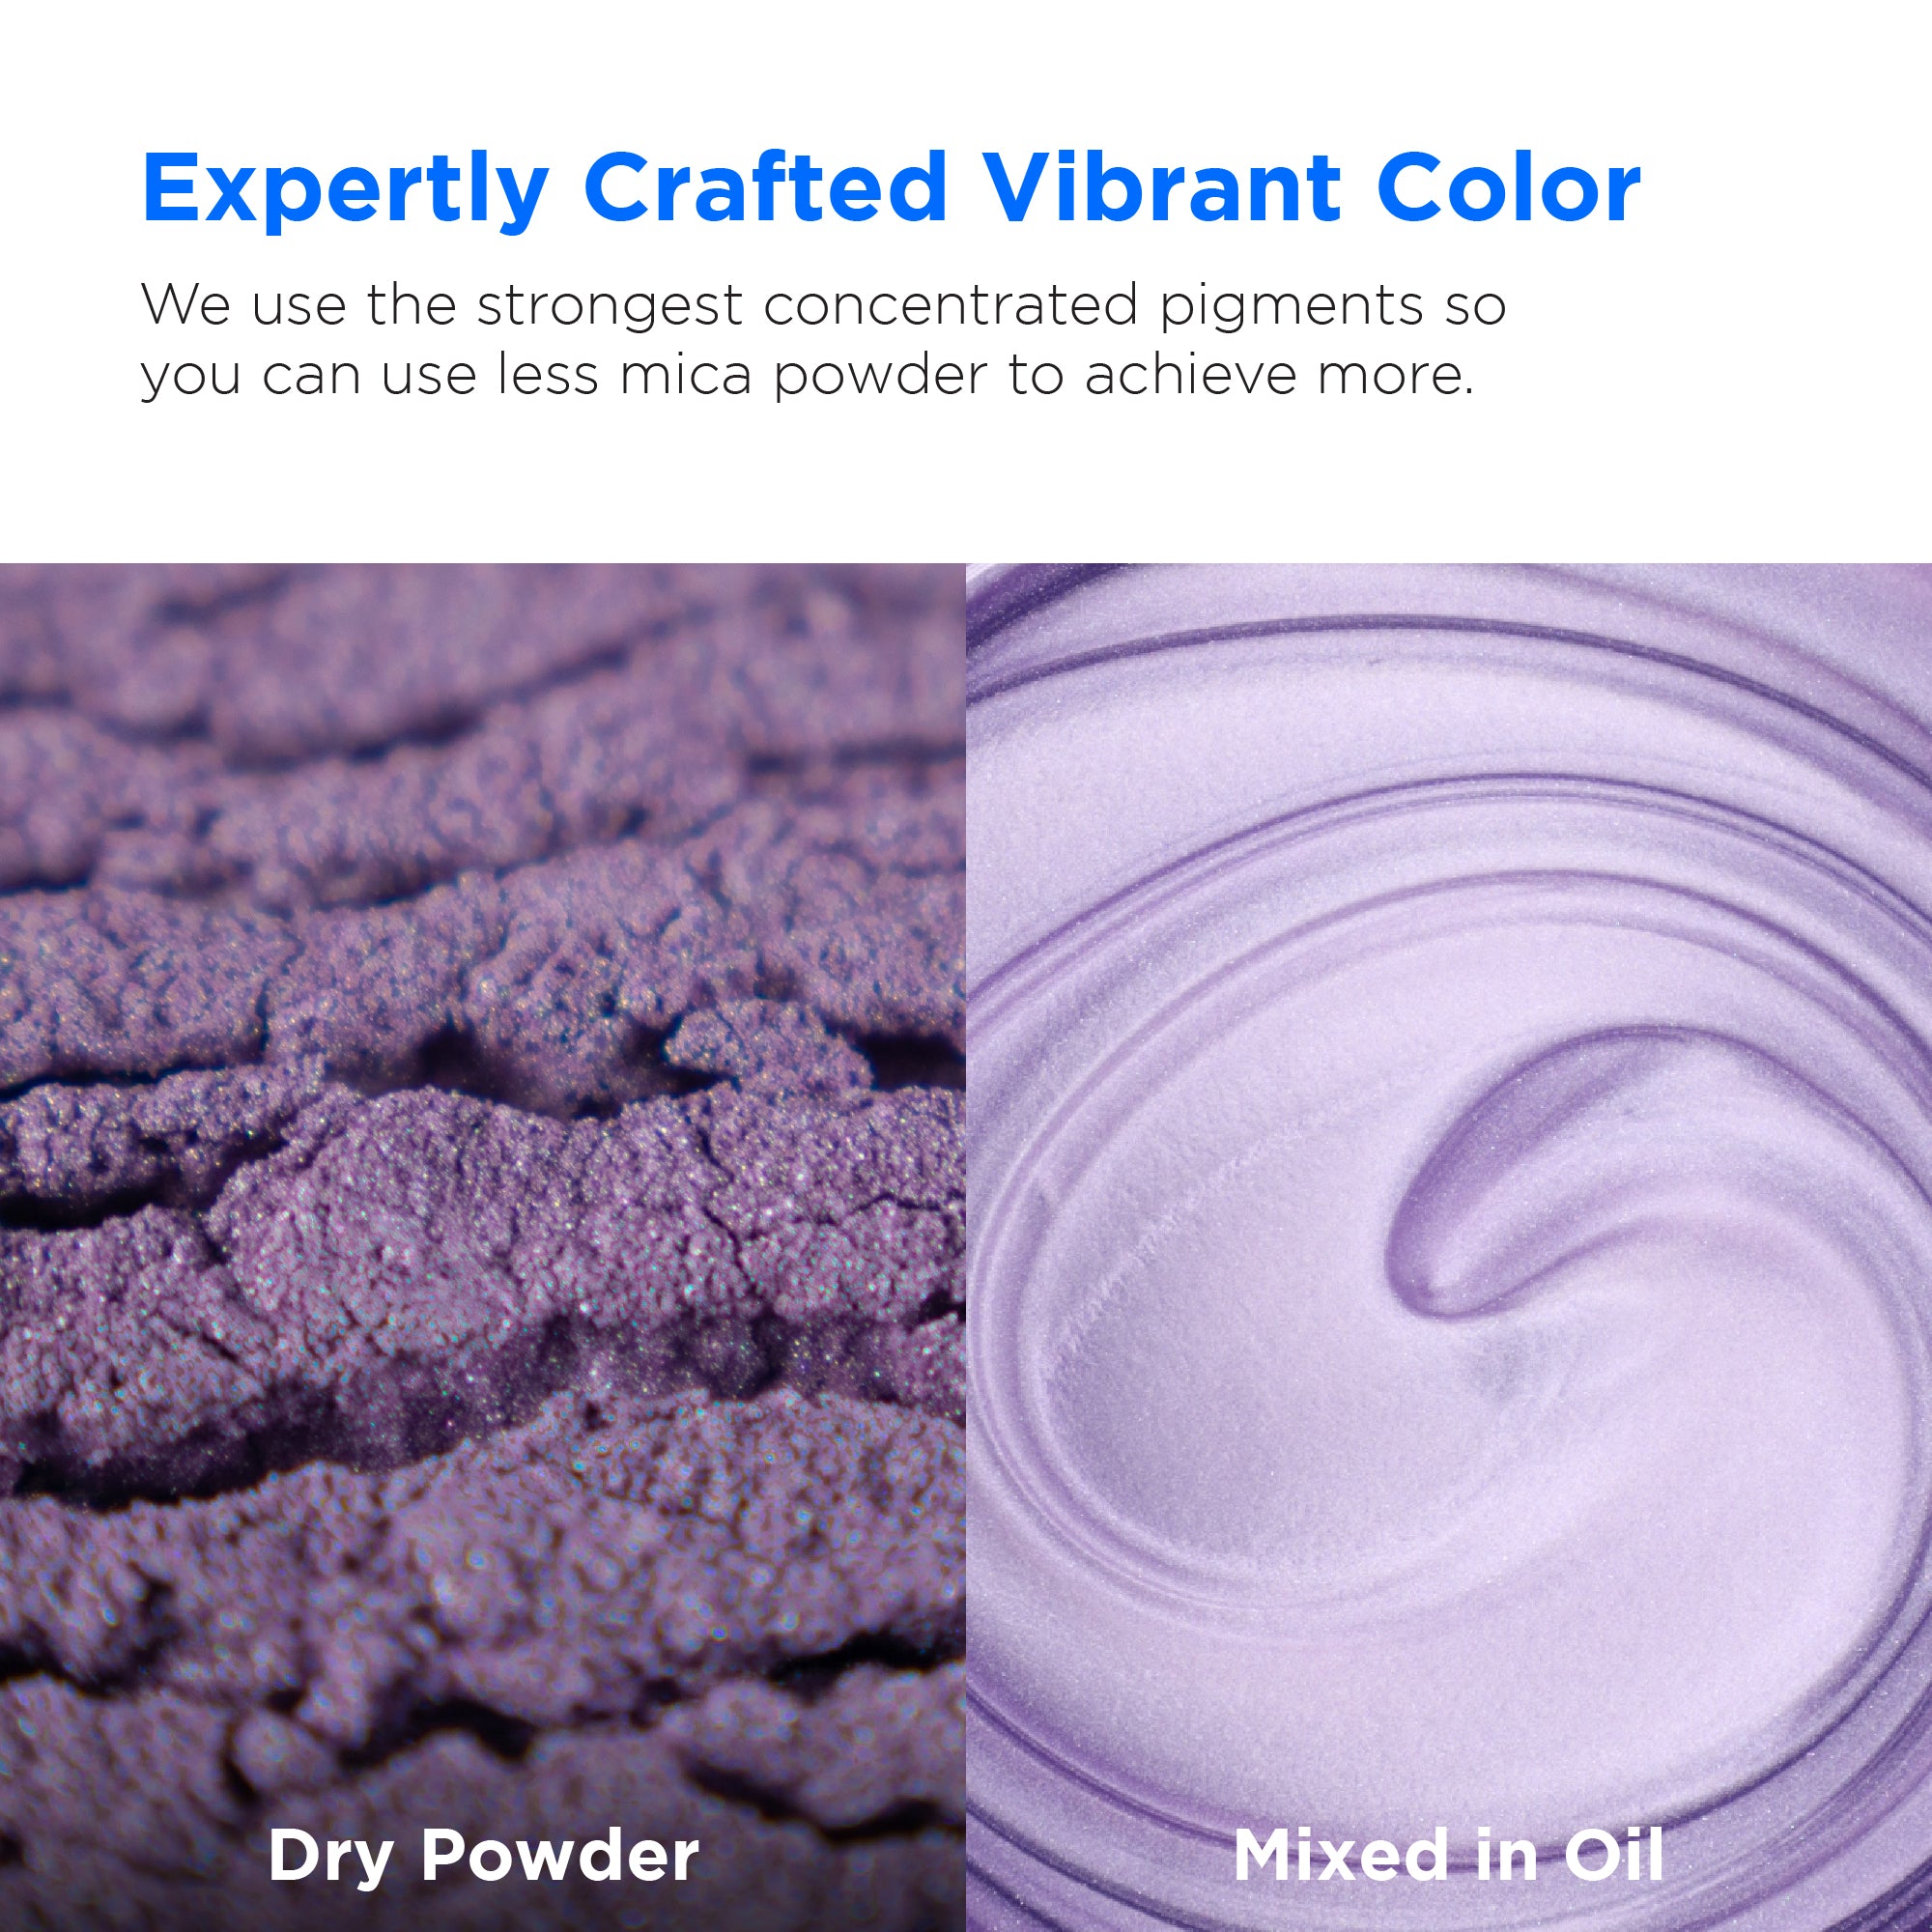 Voronet Blue – Rolio Pigments